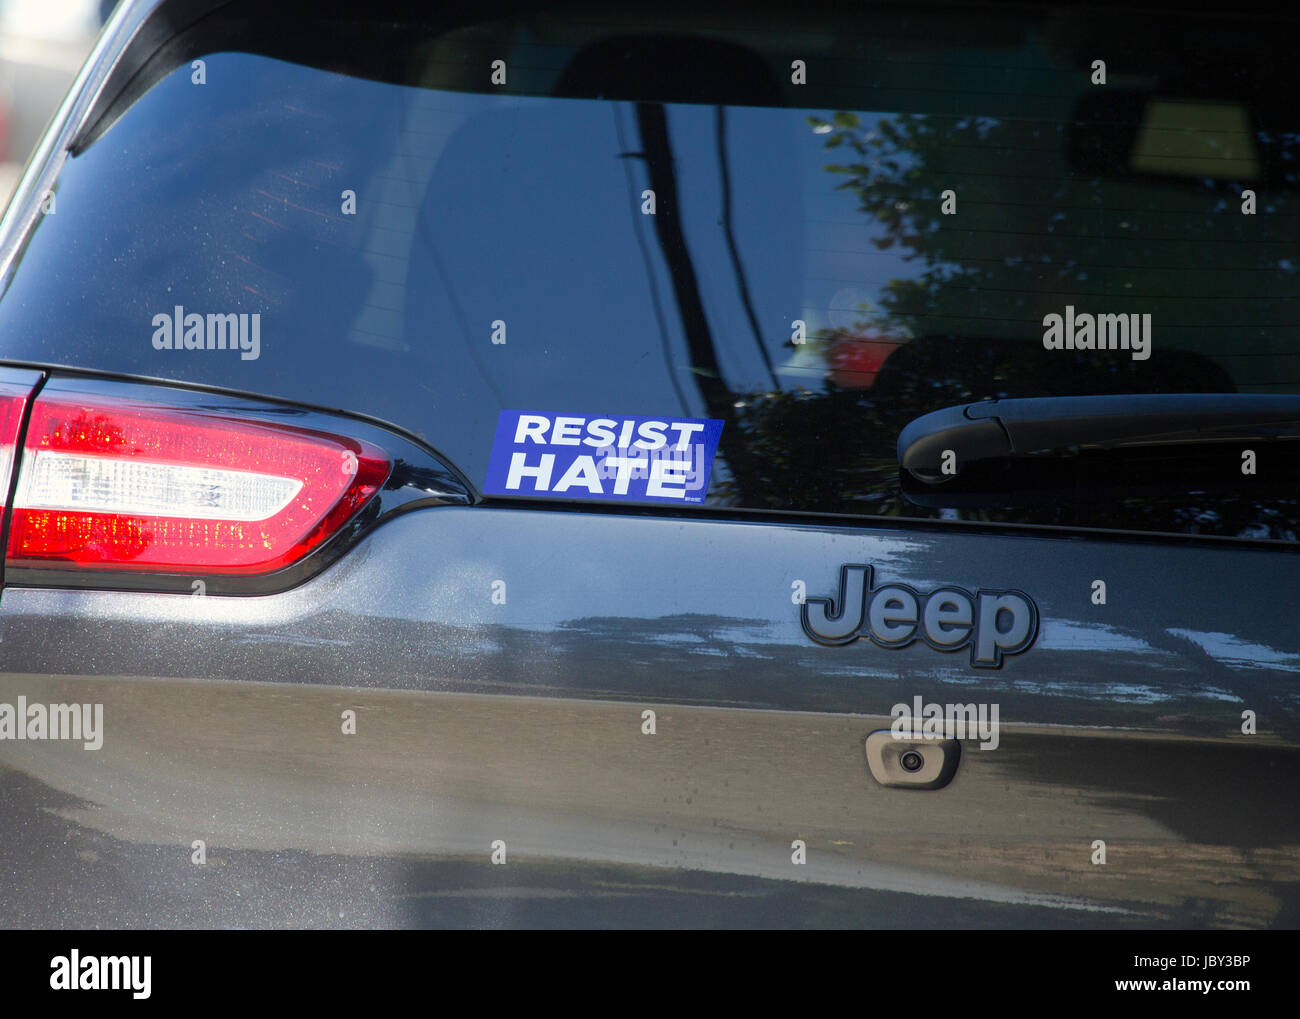 Resist Hate Car Sticker Stock Photo